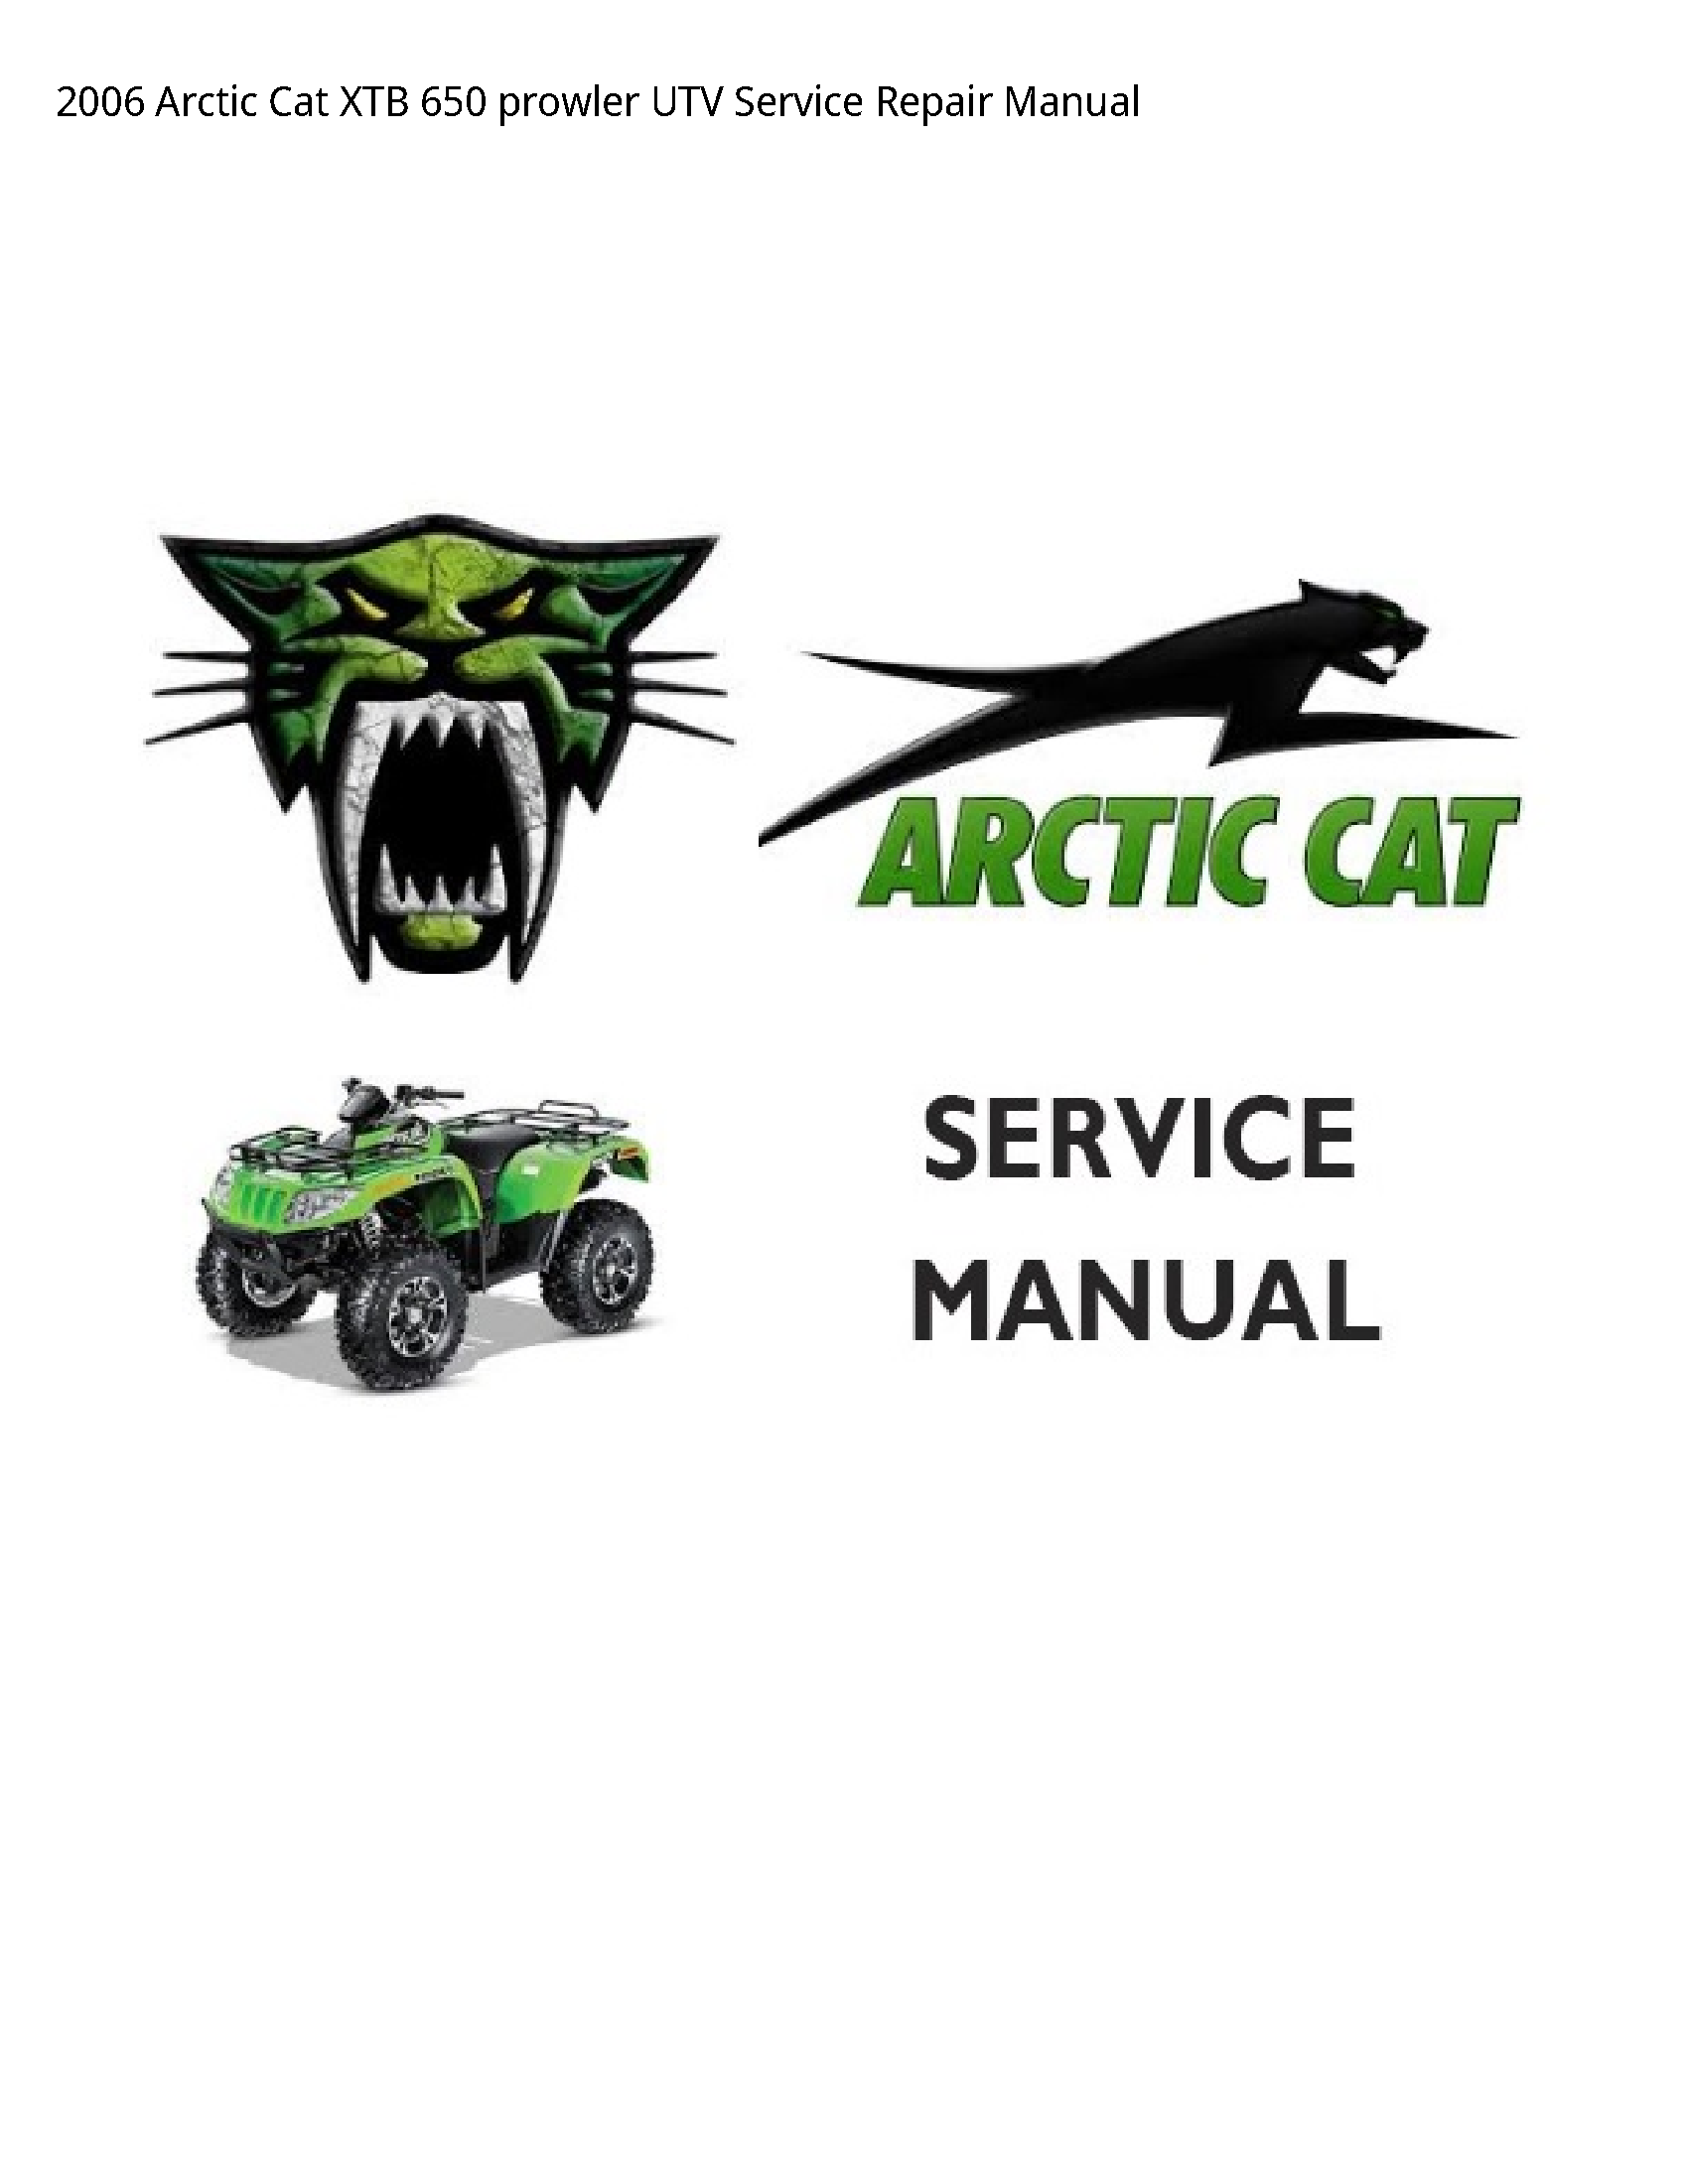 Arctic Cat 650 XTВ prowler UTV manual